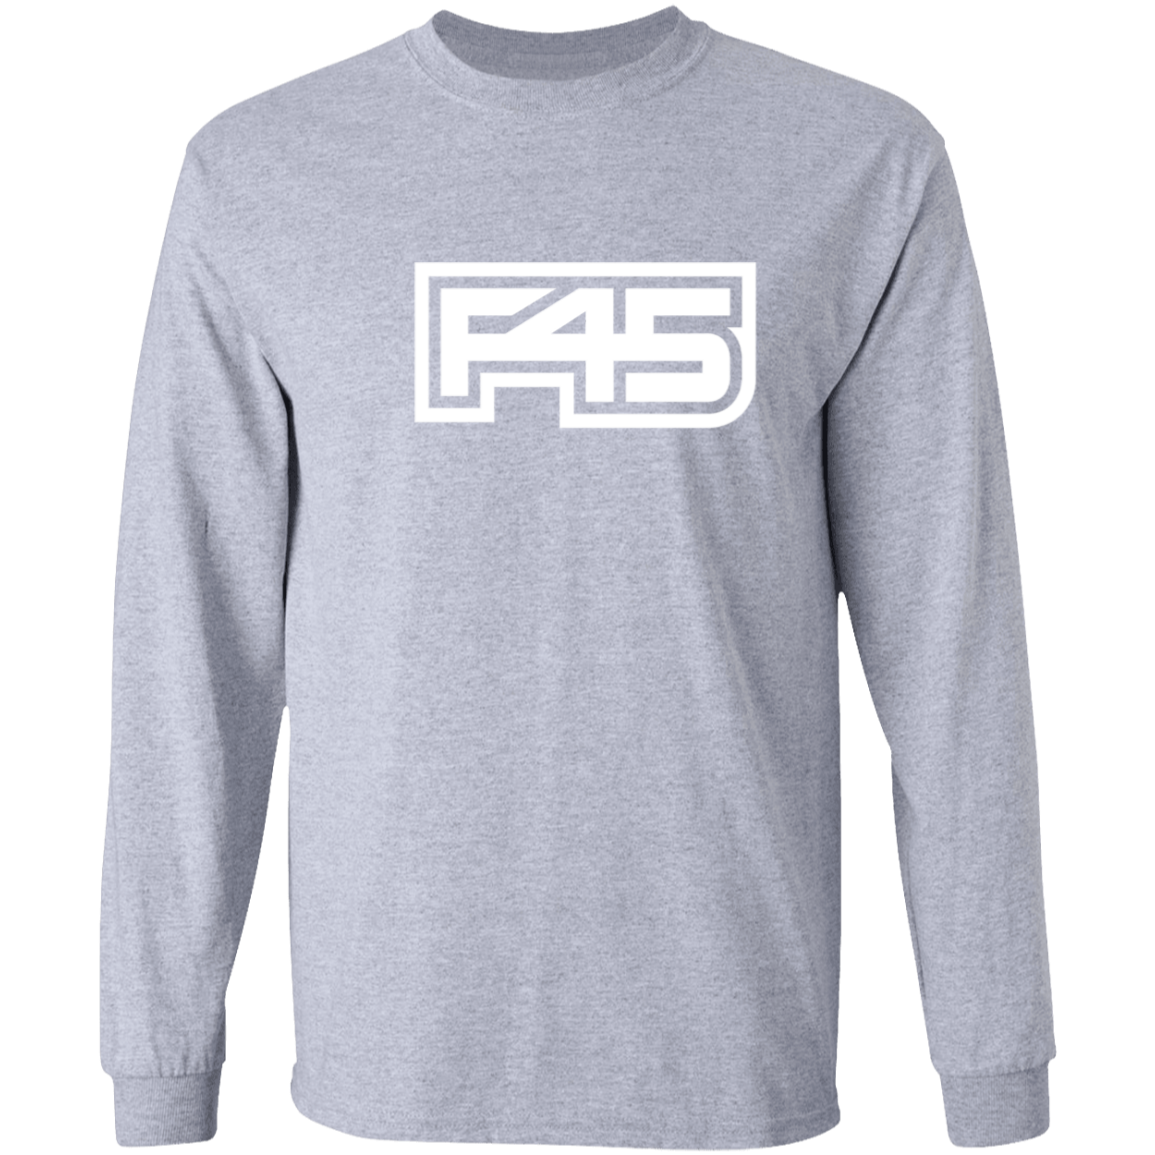 F45 LS Ultra Cotton T-Shirt